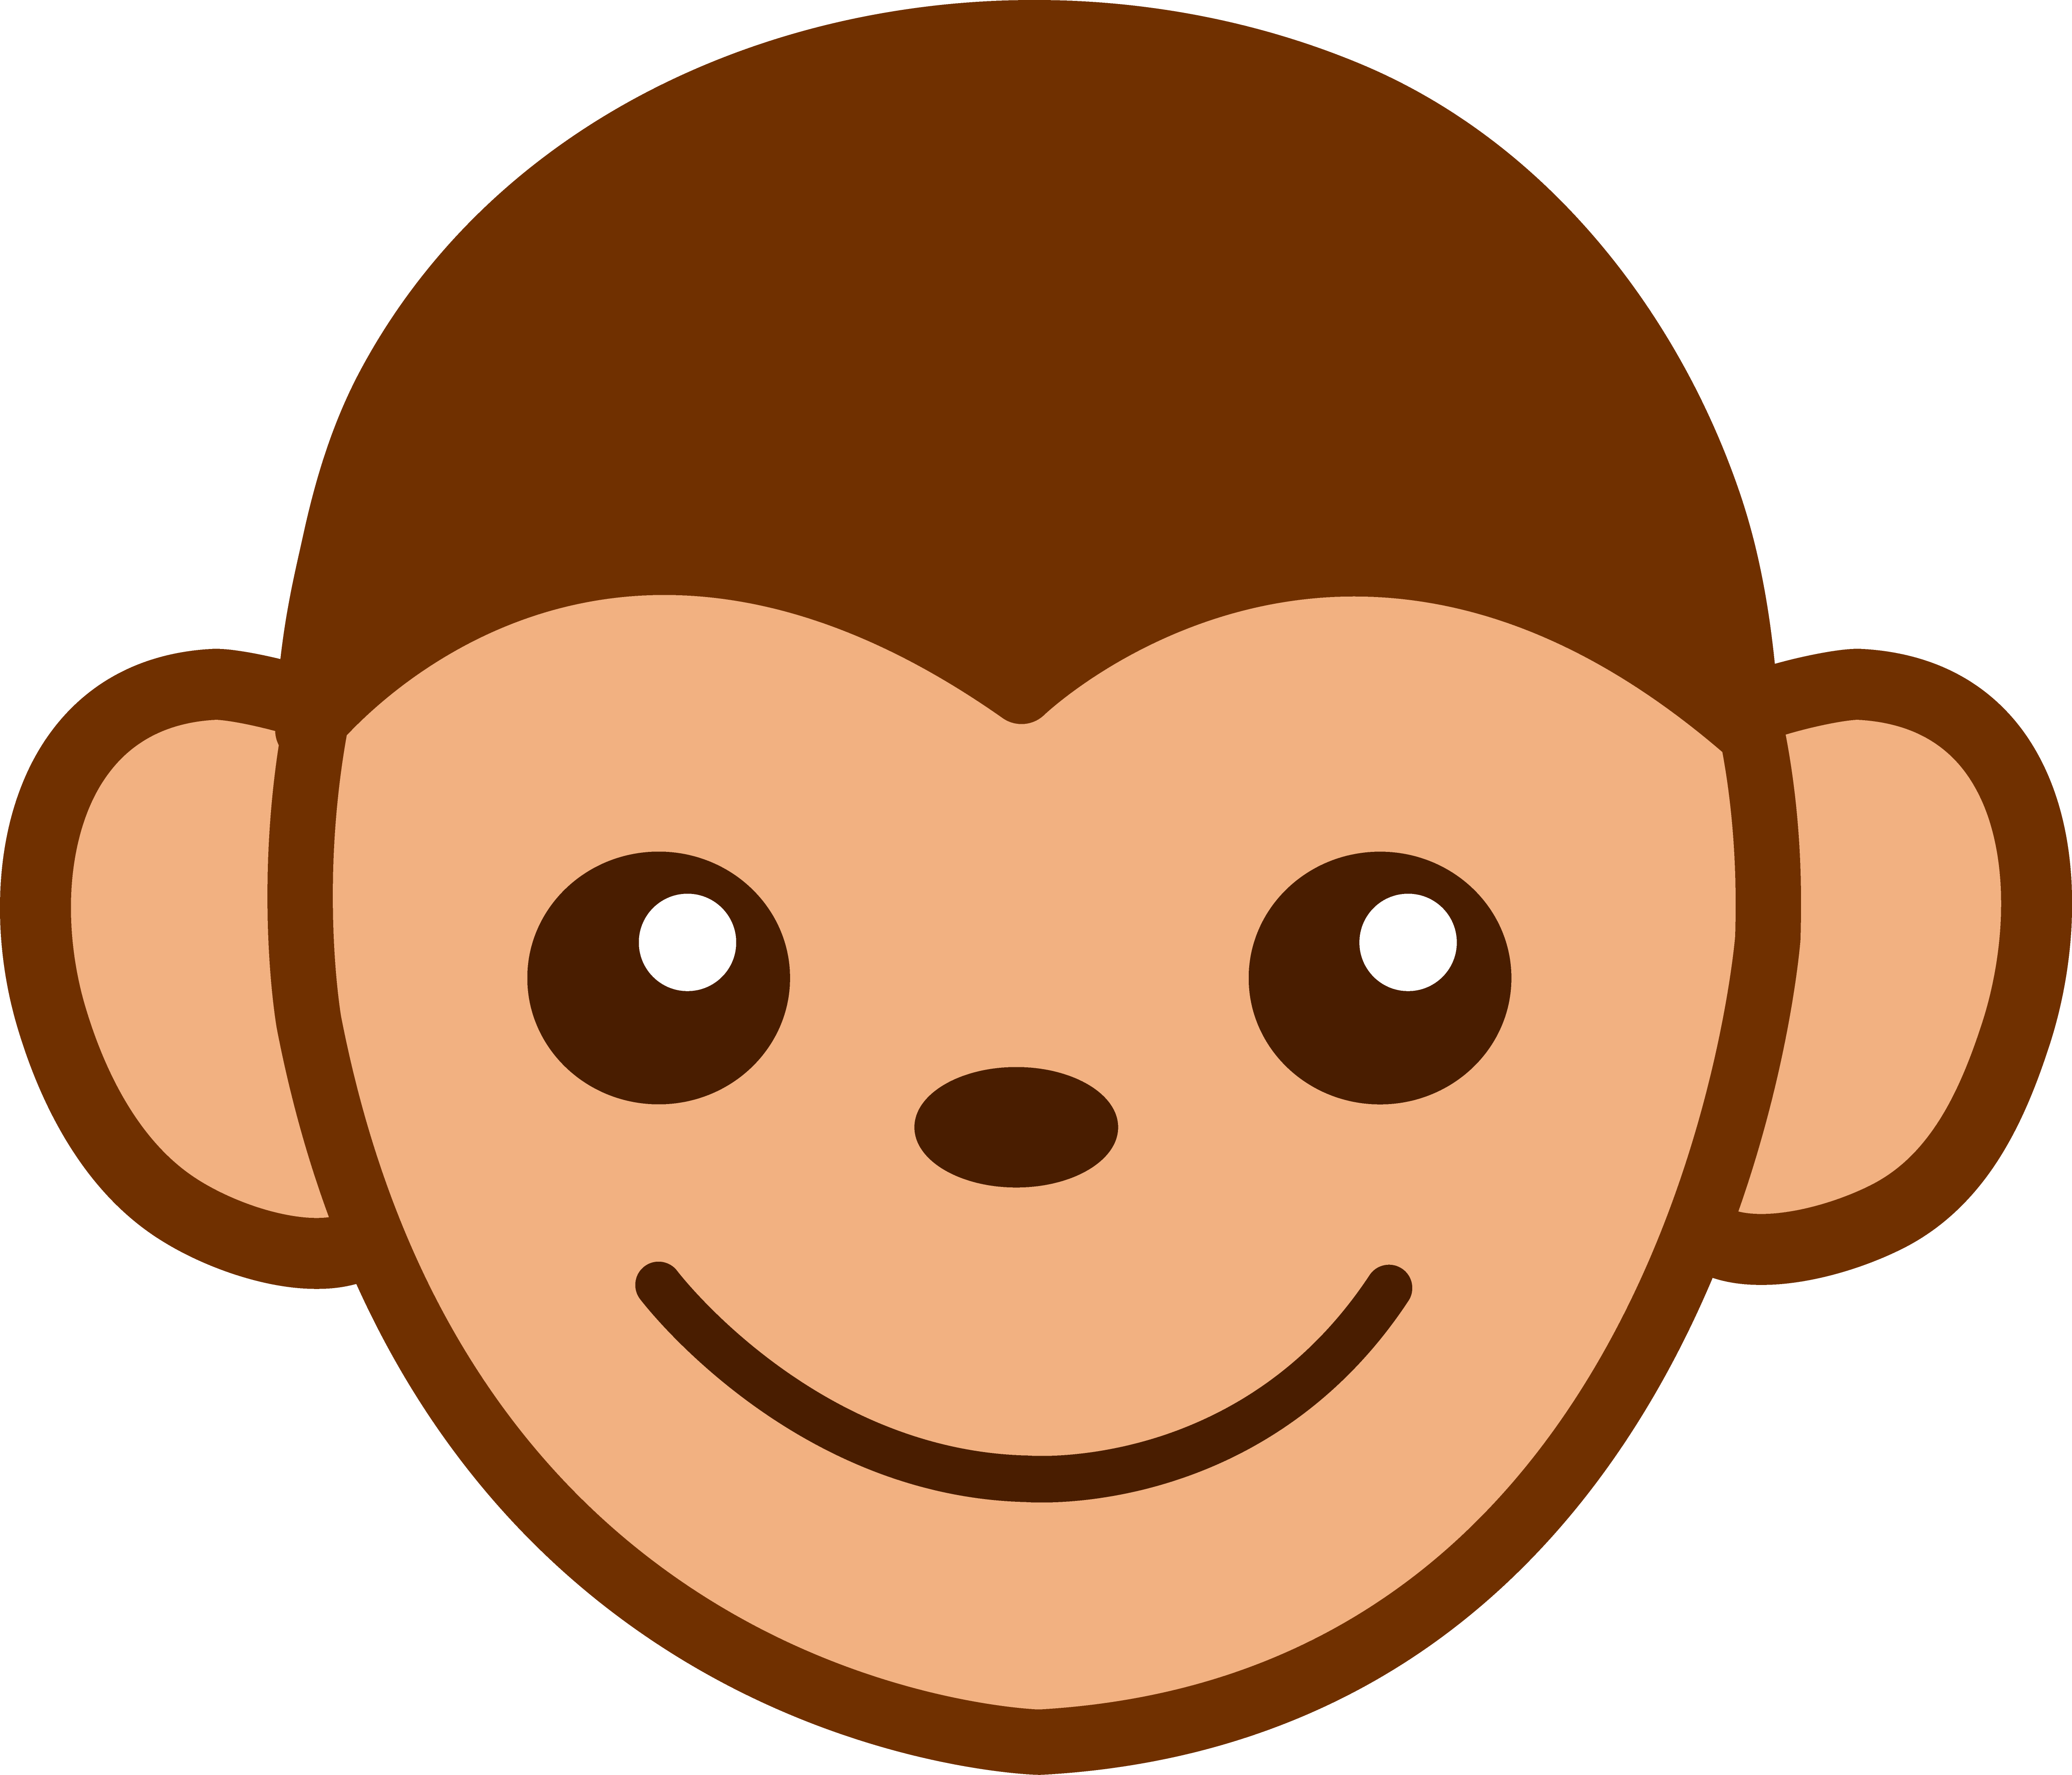 Monkey Cartoon Images - ClipArt Best